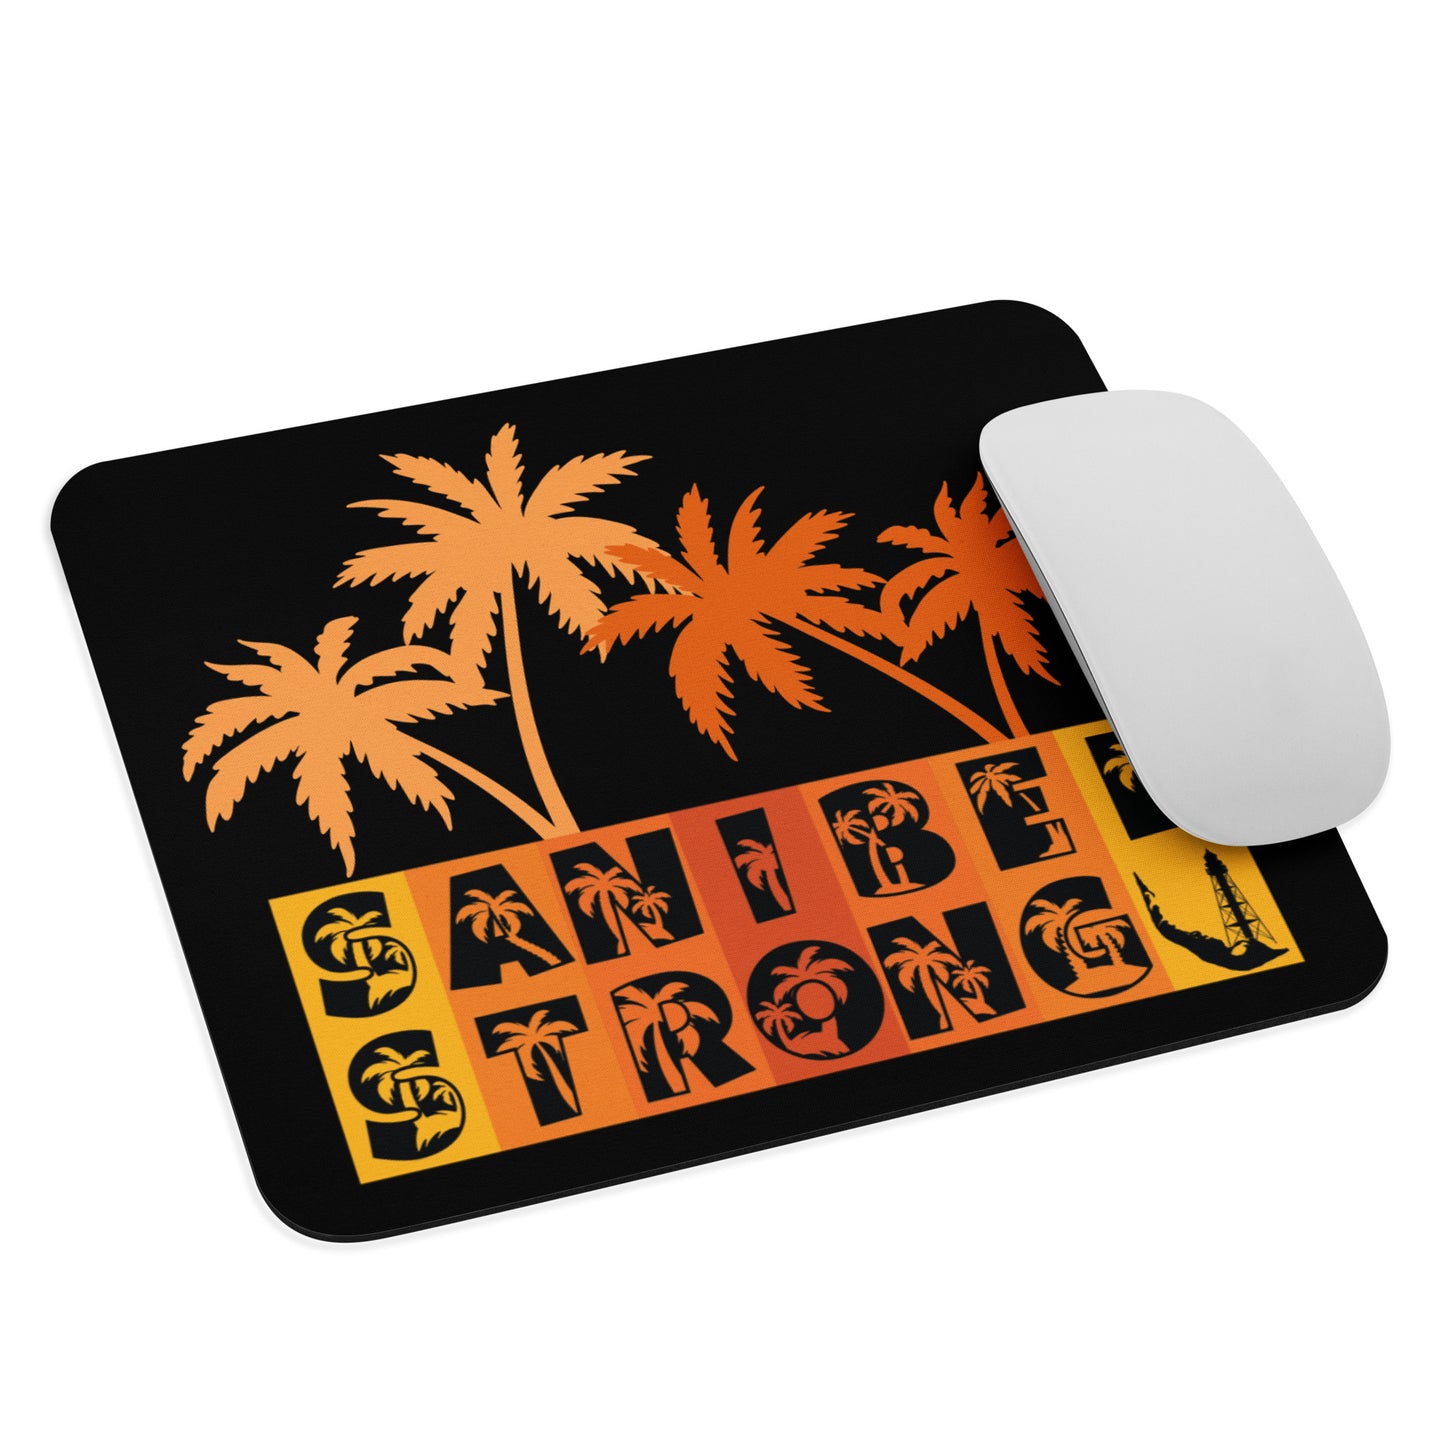 Sanibel Strong Mouse Pad - Orange Design - Palm Tree Lettering